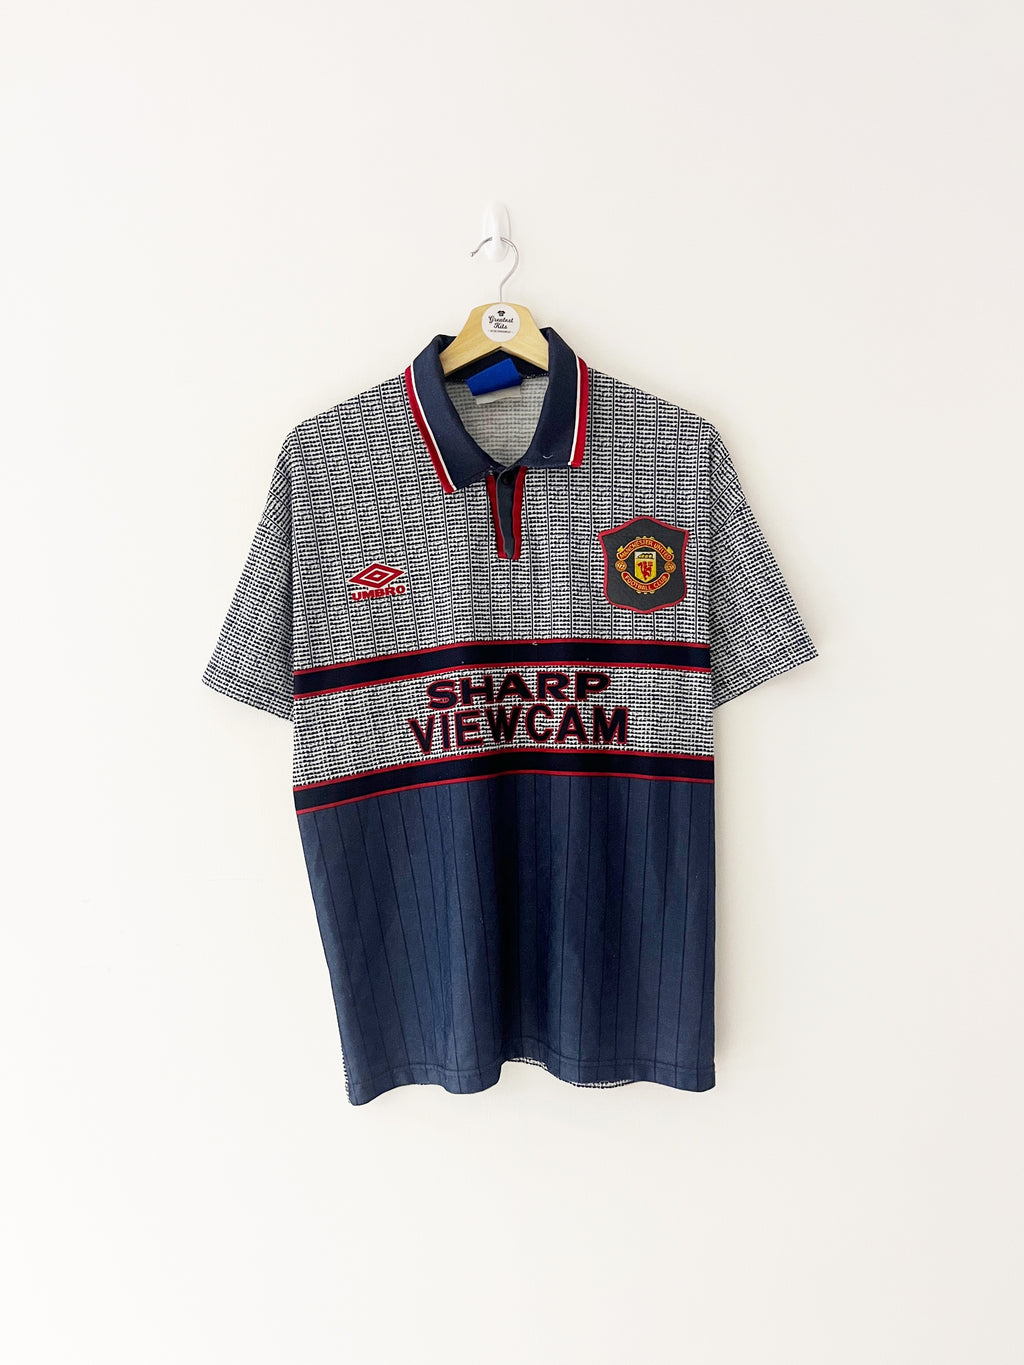 1995/96 Manchester United Away Shirt (M) 7.5/10